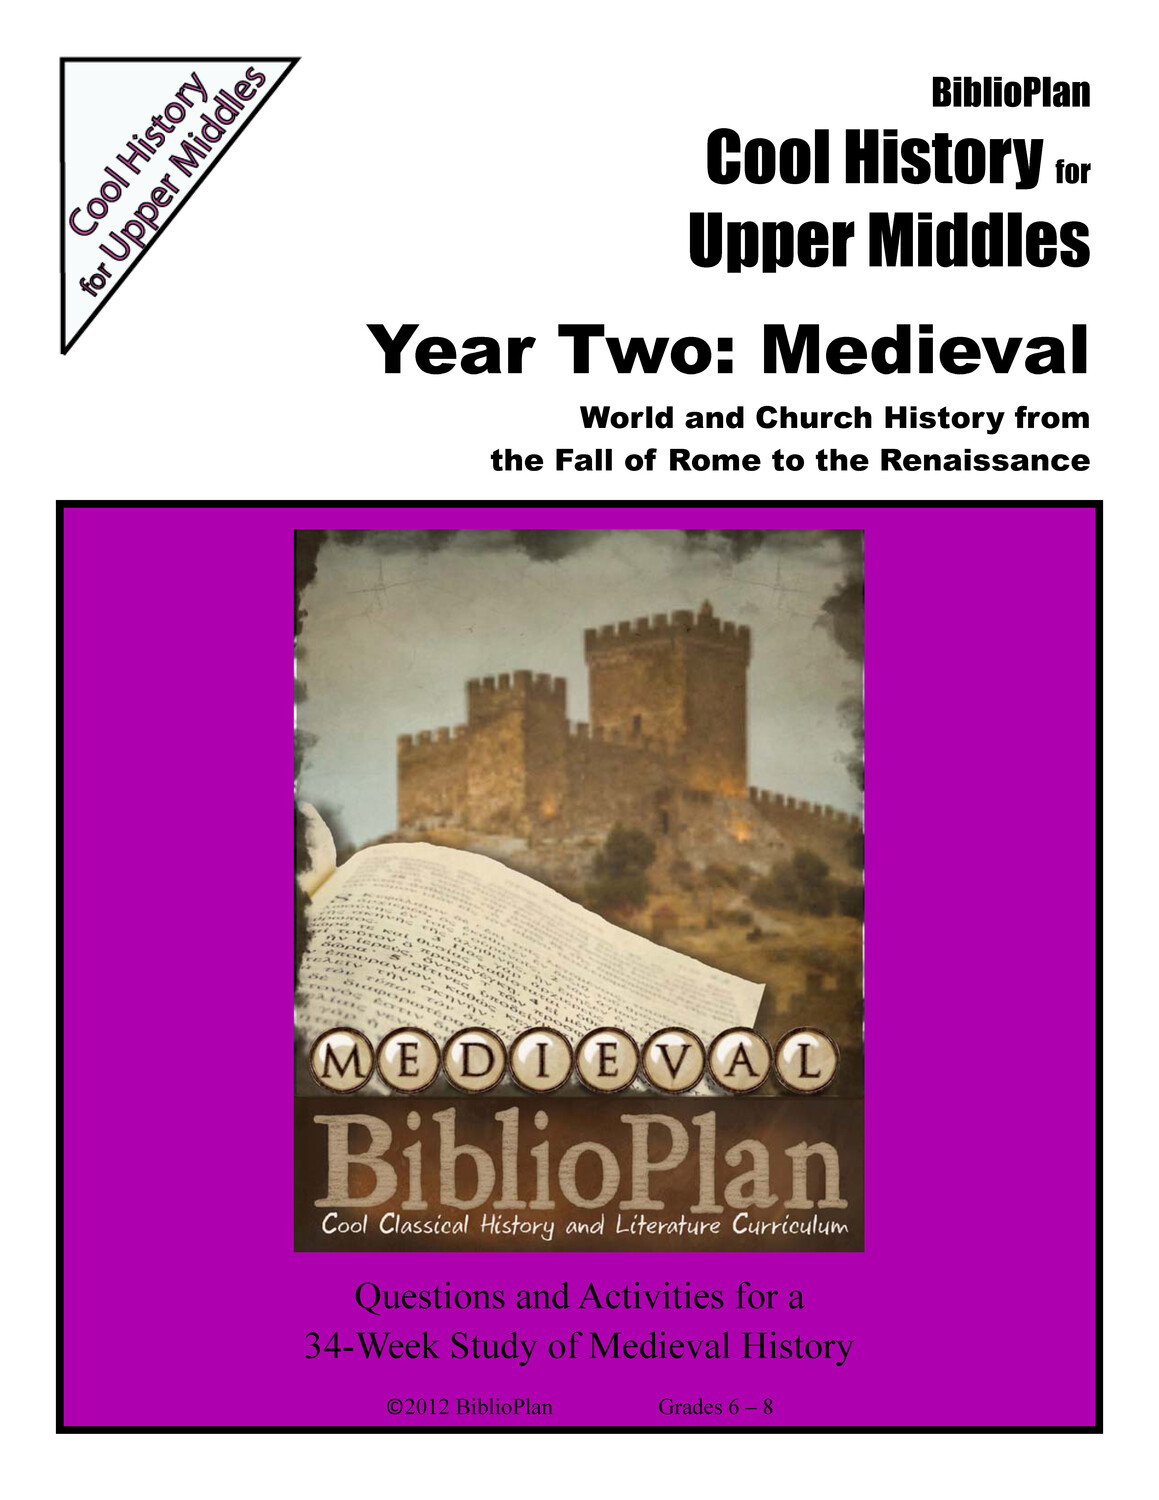 Medieval Cool History for Upper Middles Hardcopy